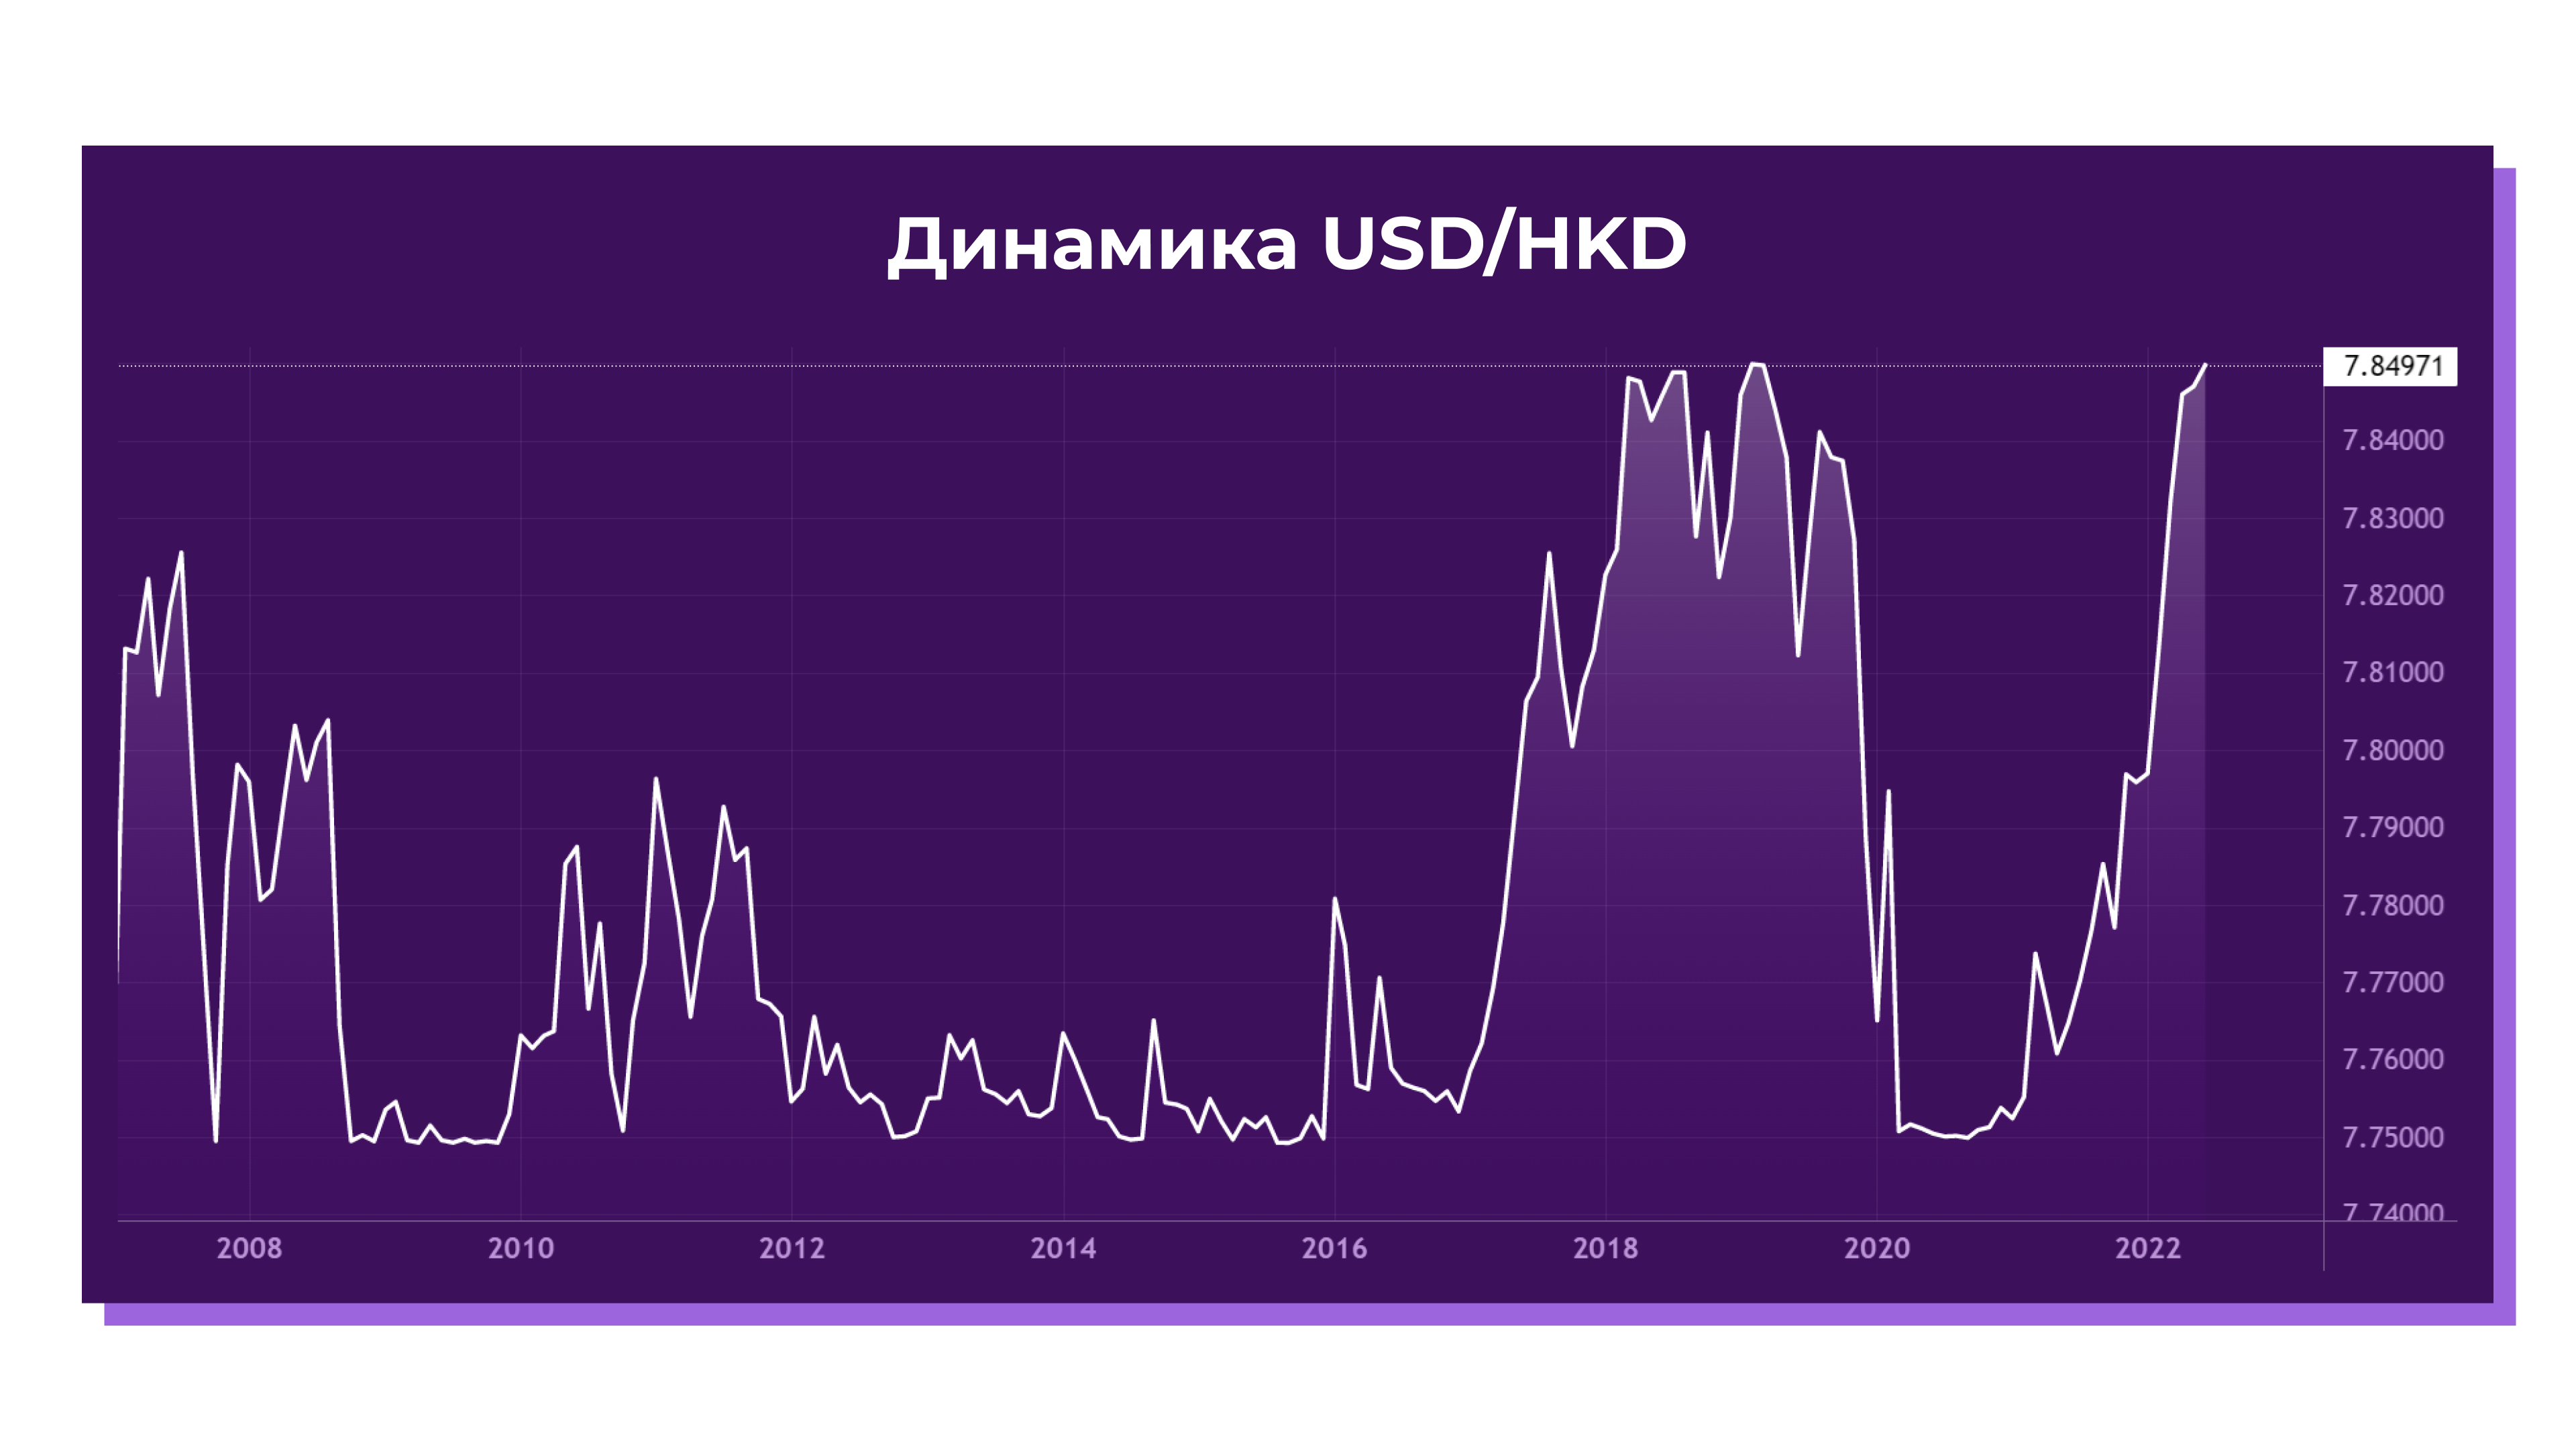 Динамика USD/HKD